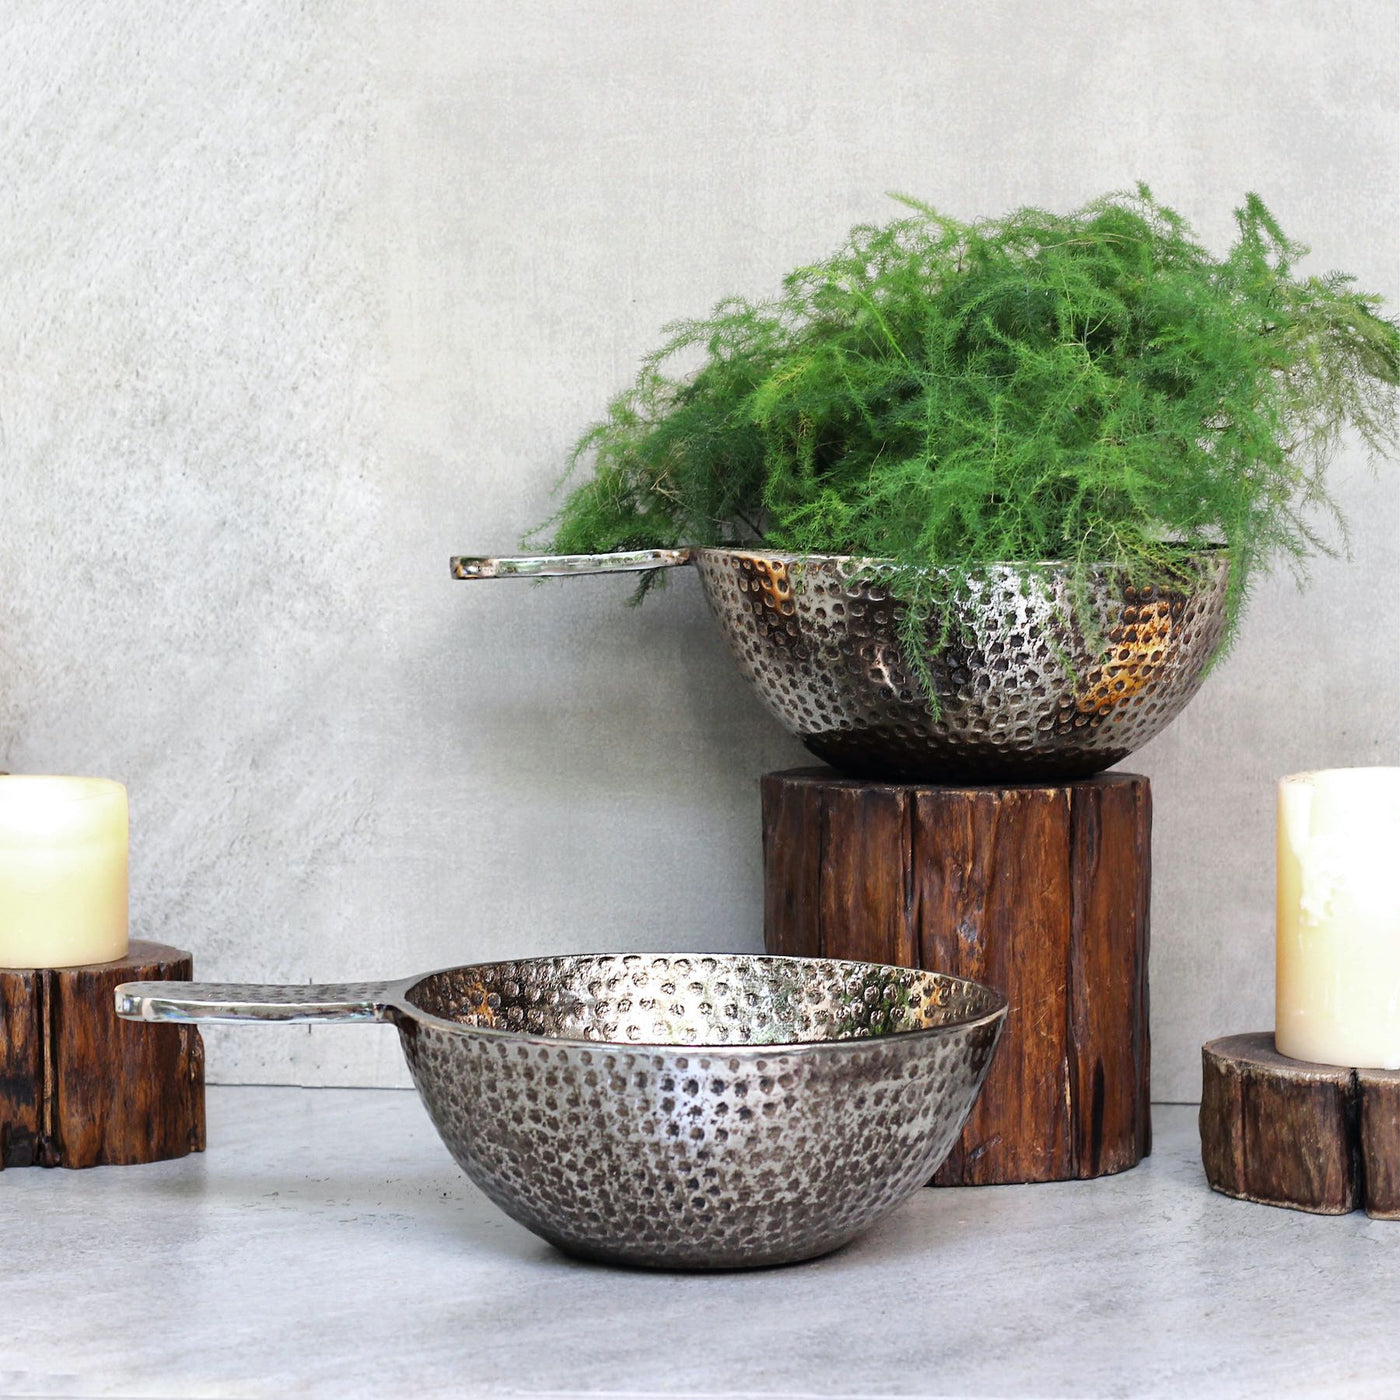 textured metal bowl or planter